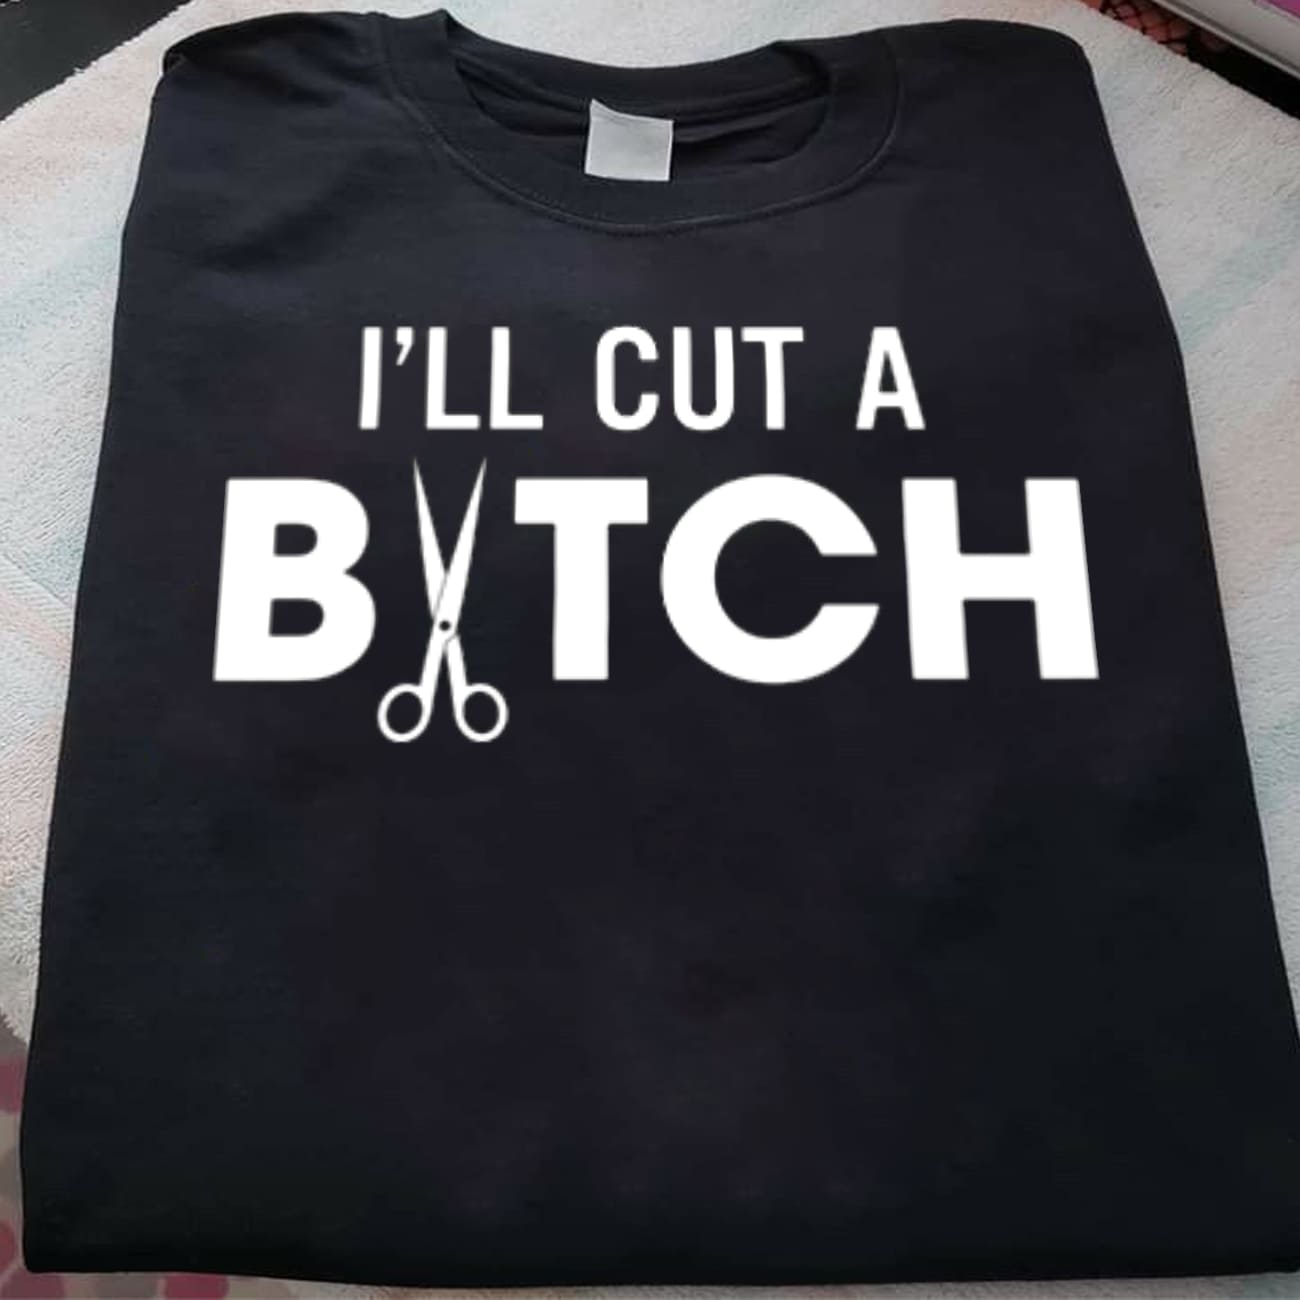 I'll cut a bitch - Scissor graphic T-shirt, bitch hater